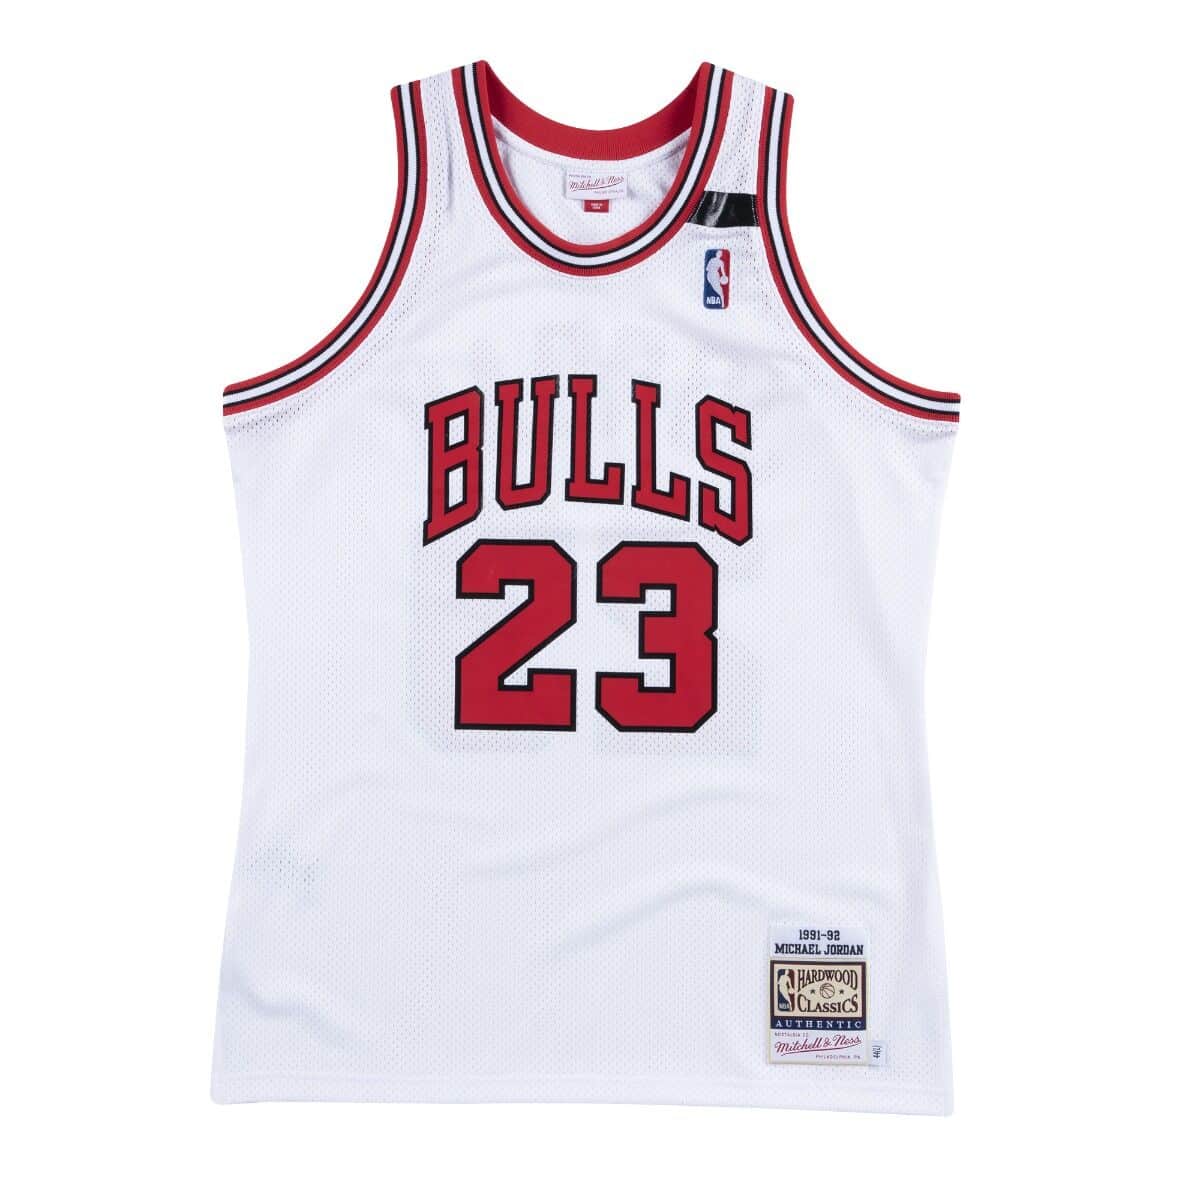 Jersey Chicago Bulls 1991-92 Michael Jordan